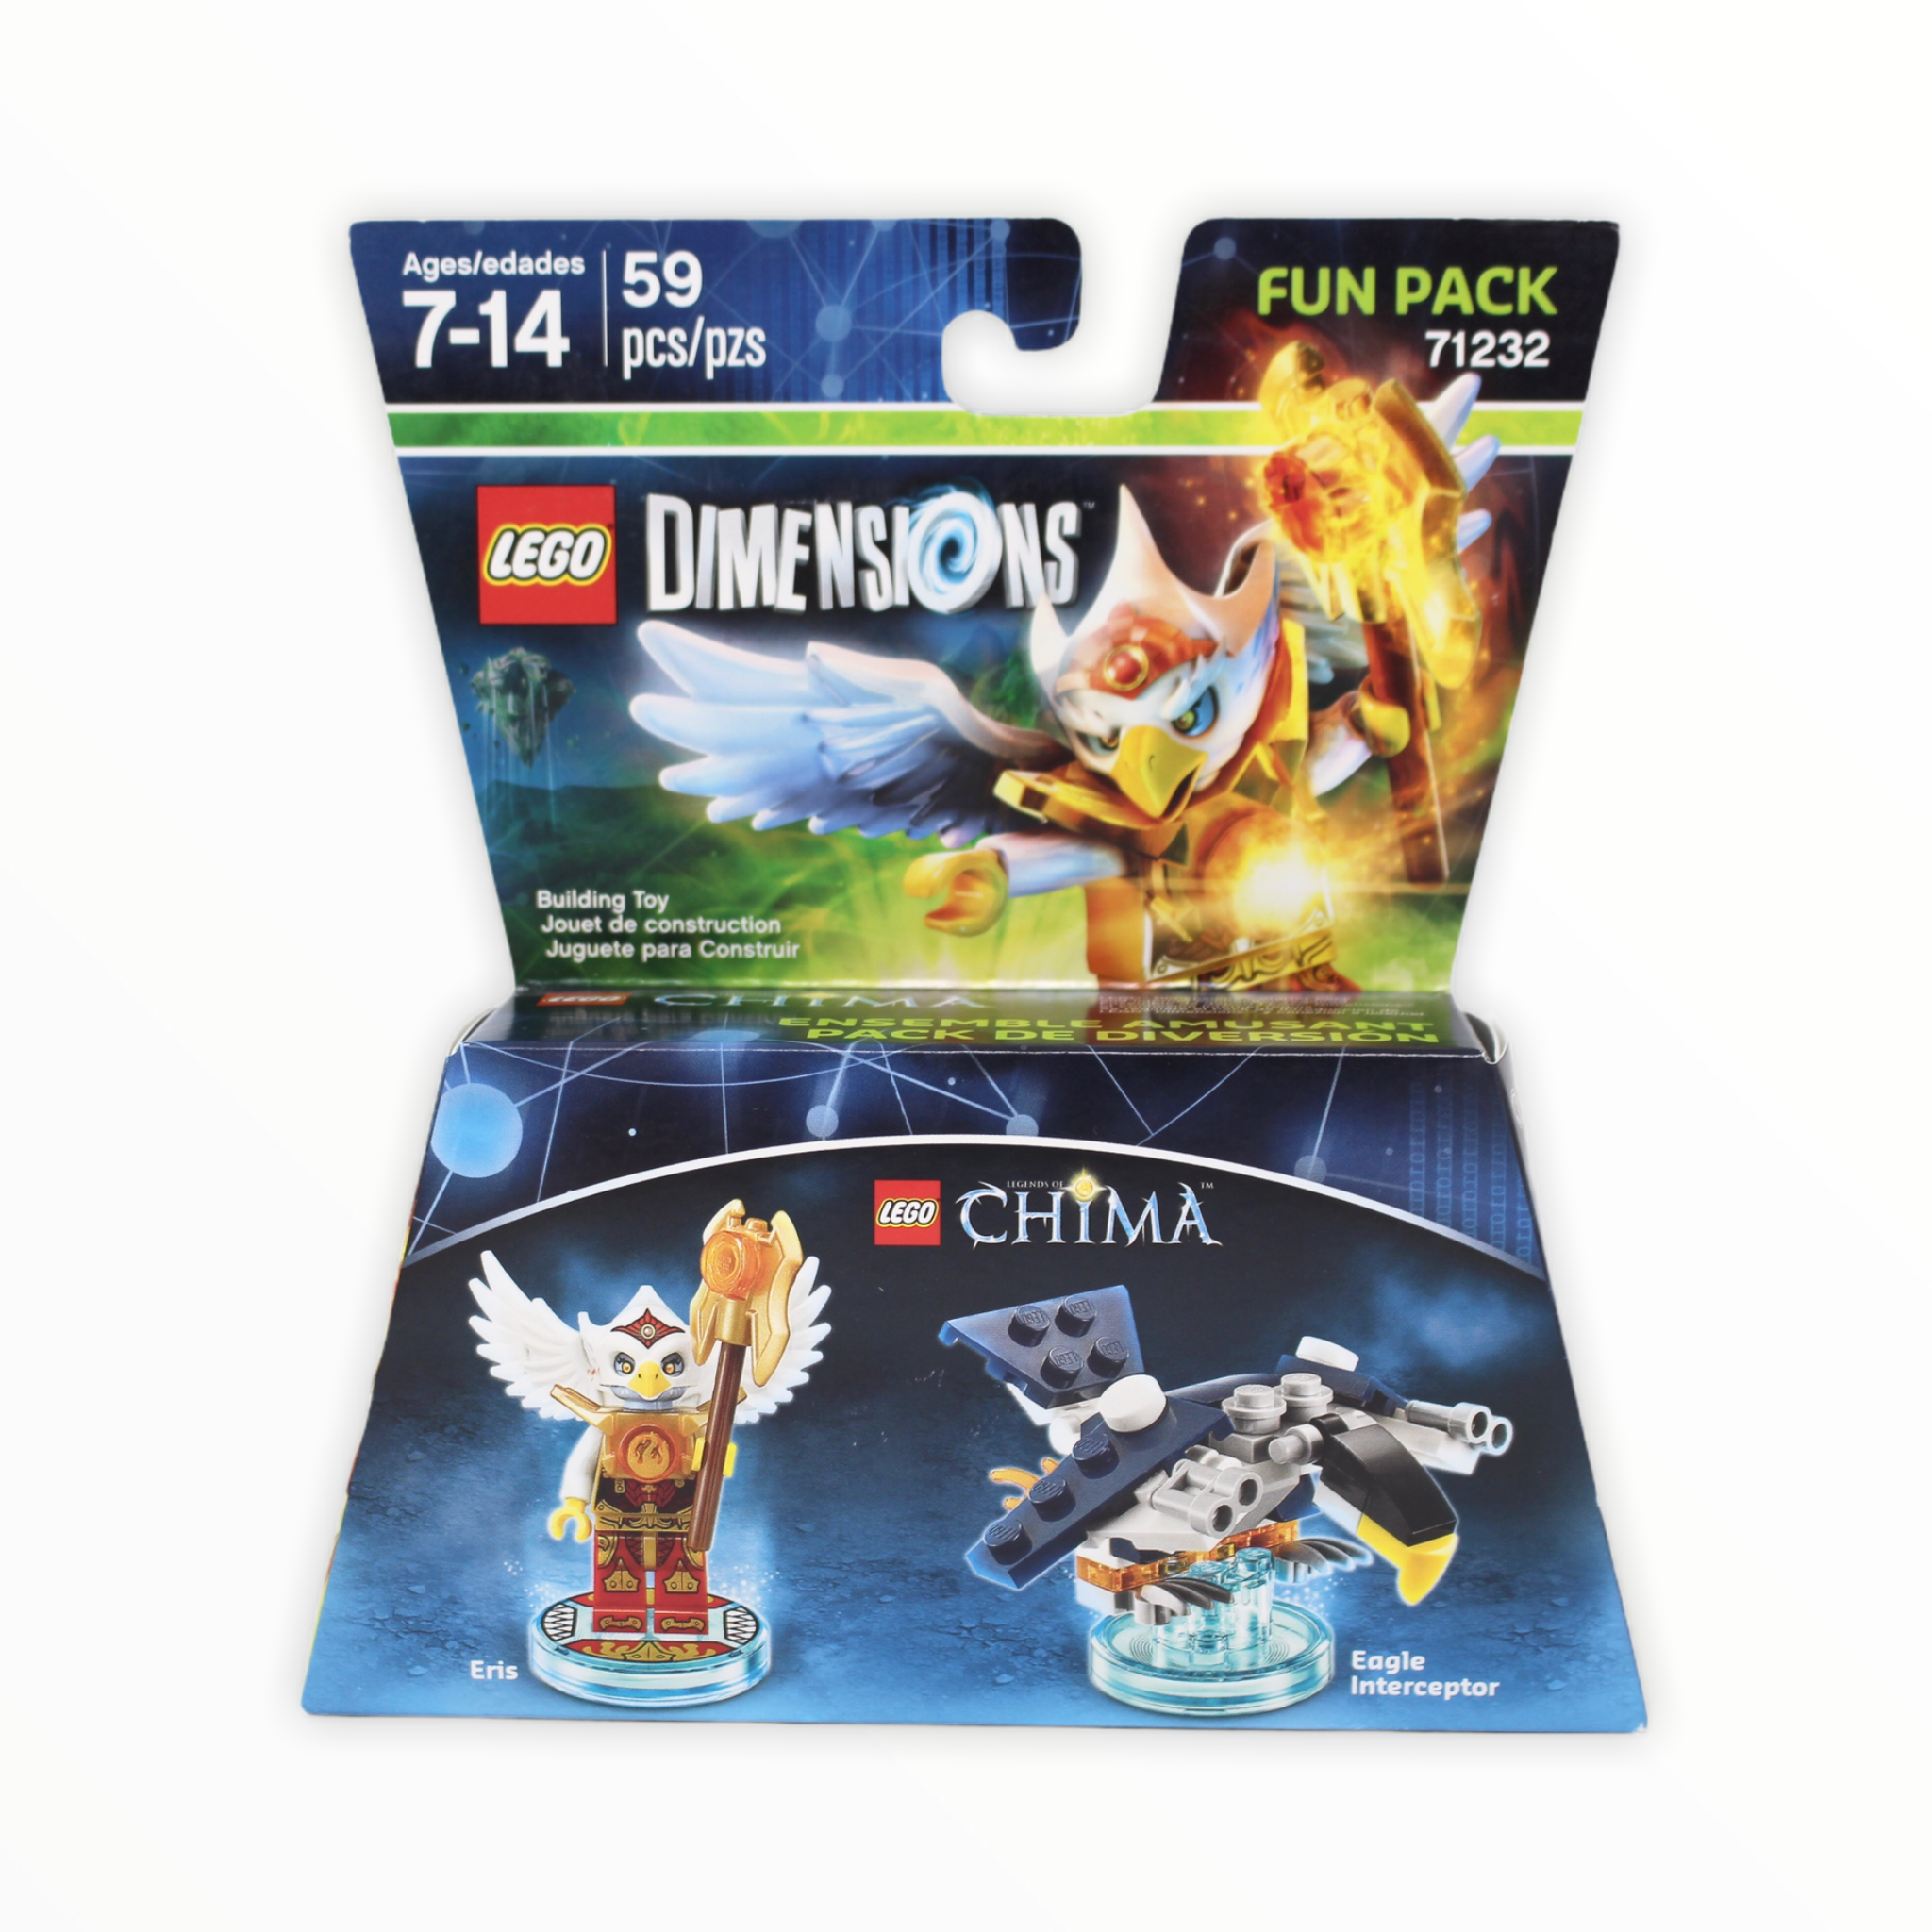 Retired Set 71232 Dimensions Fun Pack - Legends of Chima Eris and Eagle Interceptor